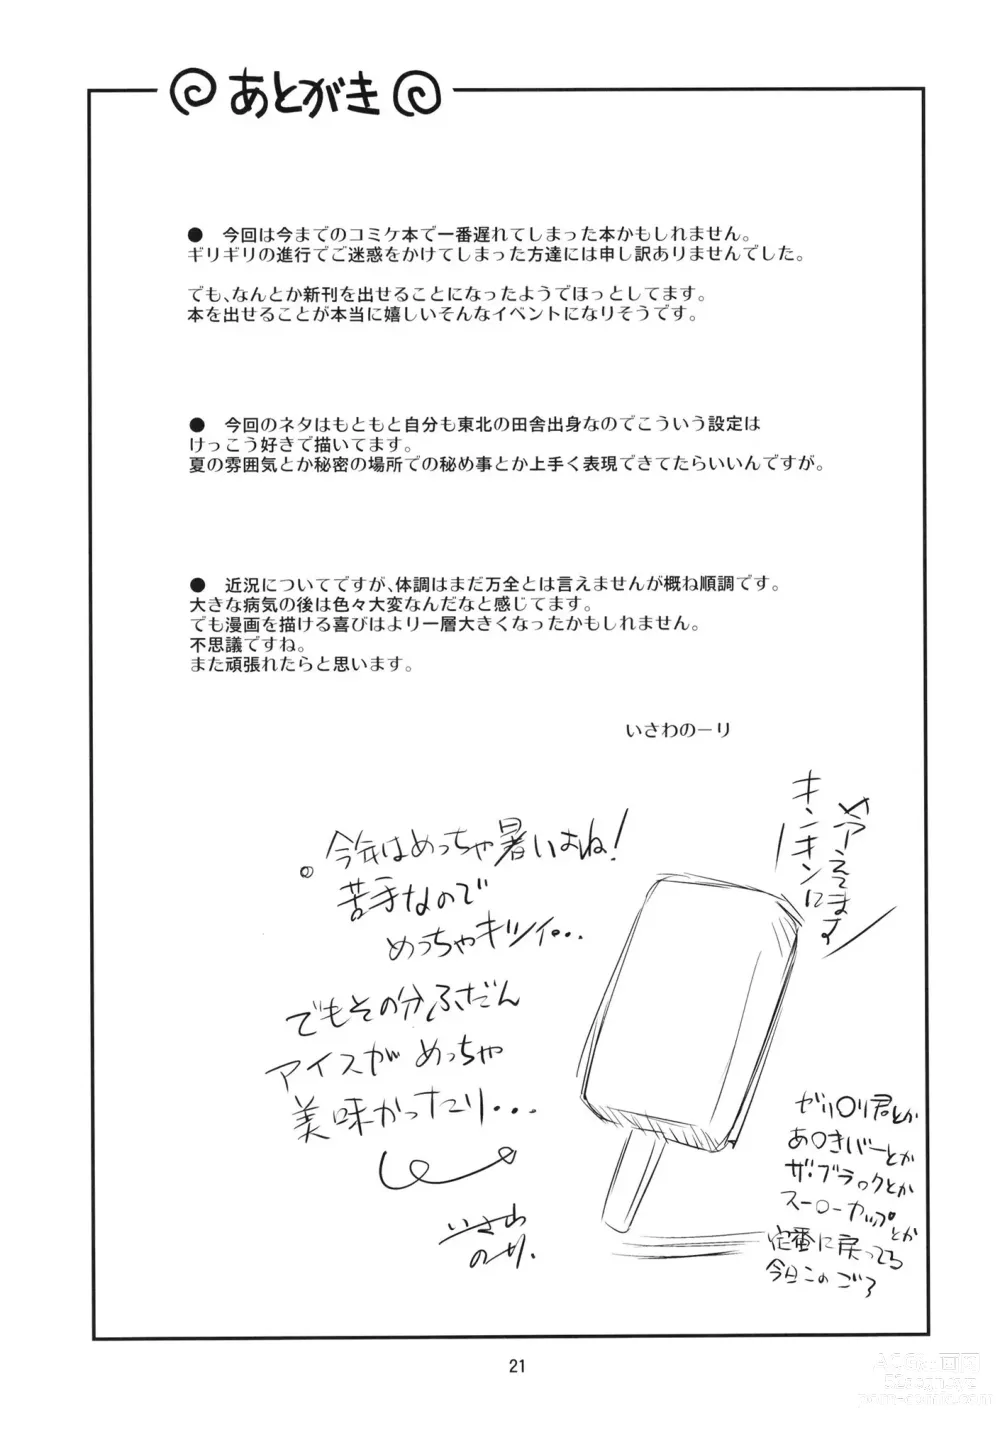 Page 21 of doujinshi Himitsu kichi.